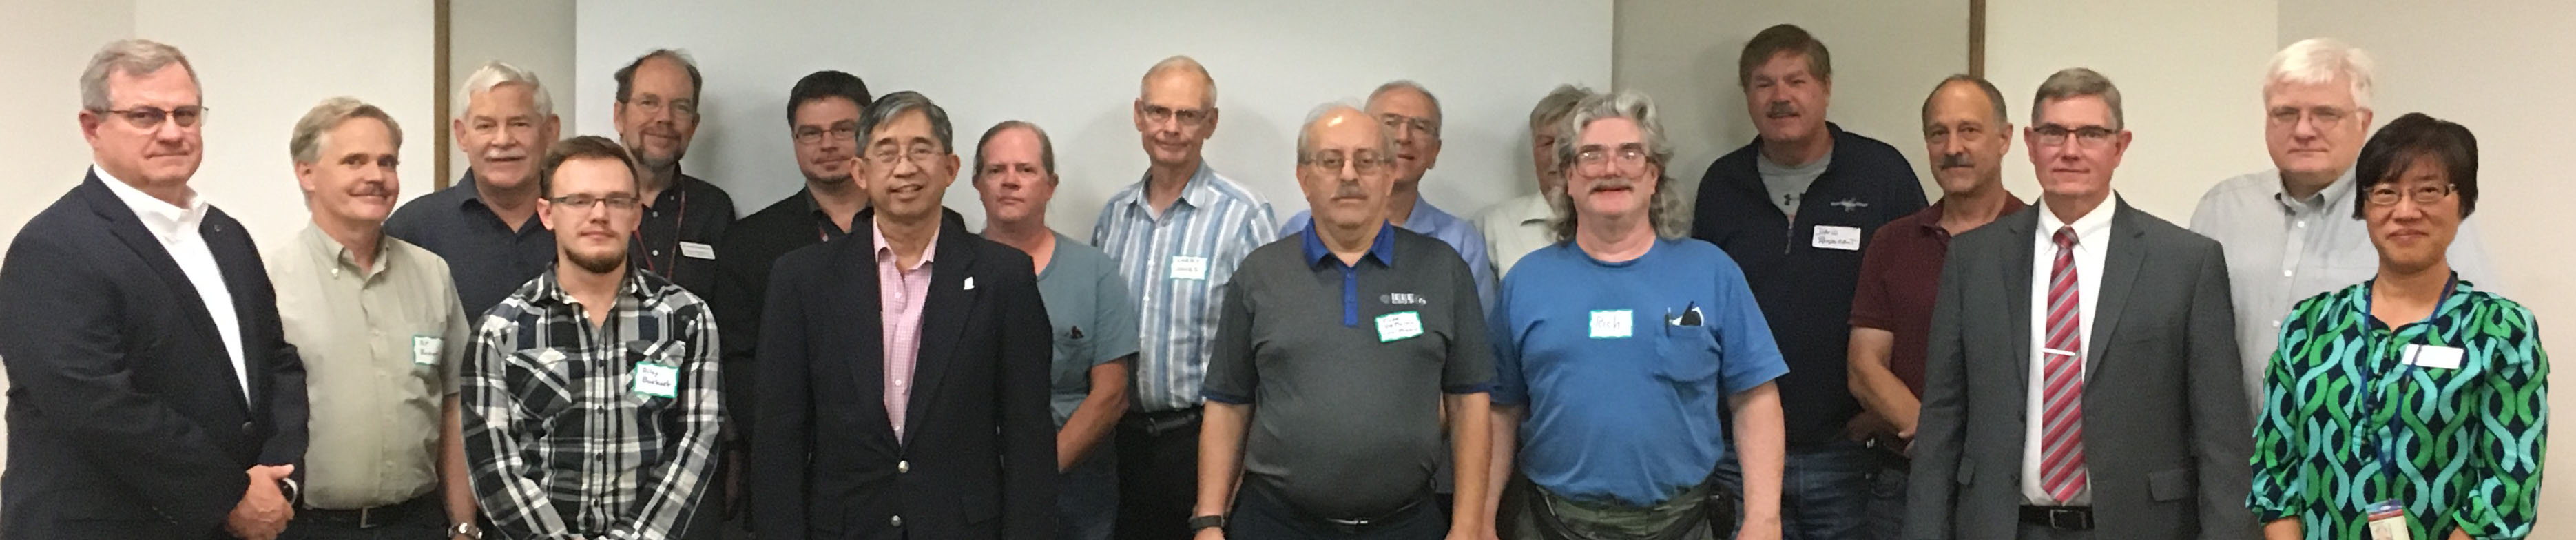 Group Photo of IEEE